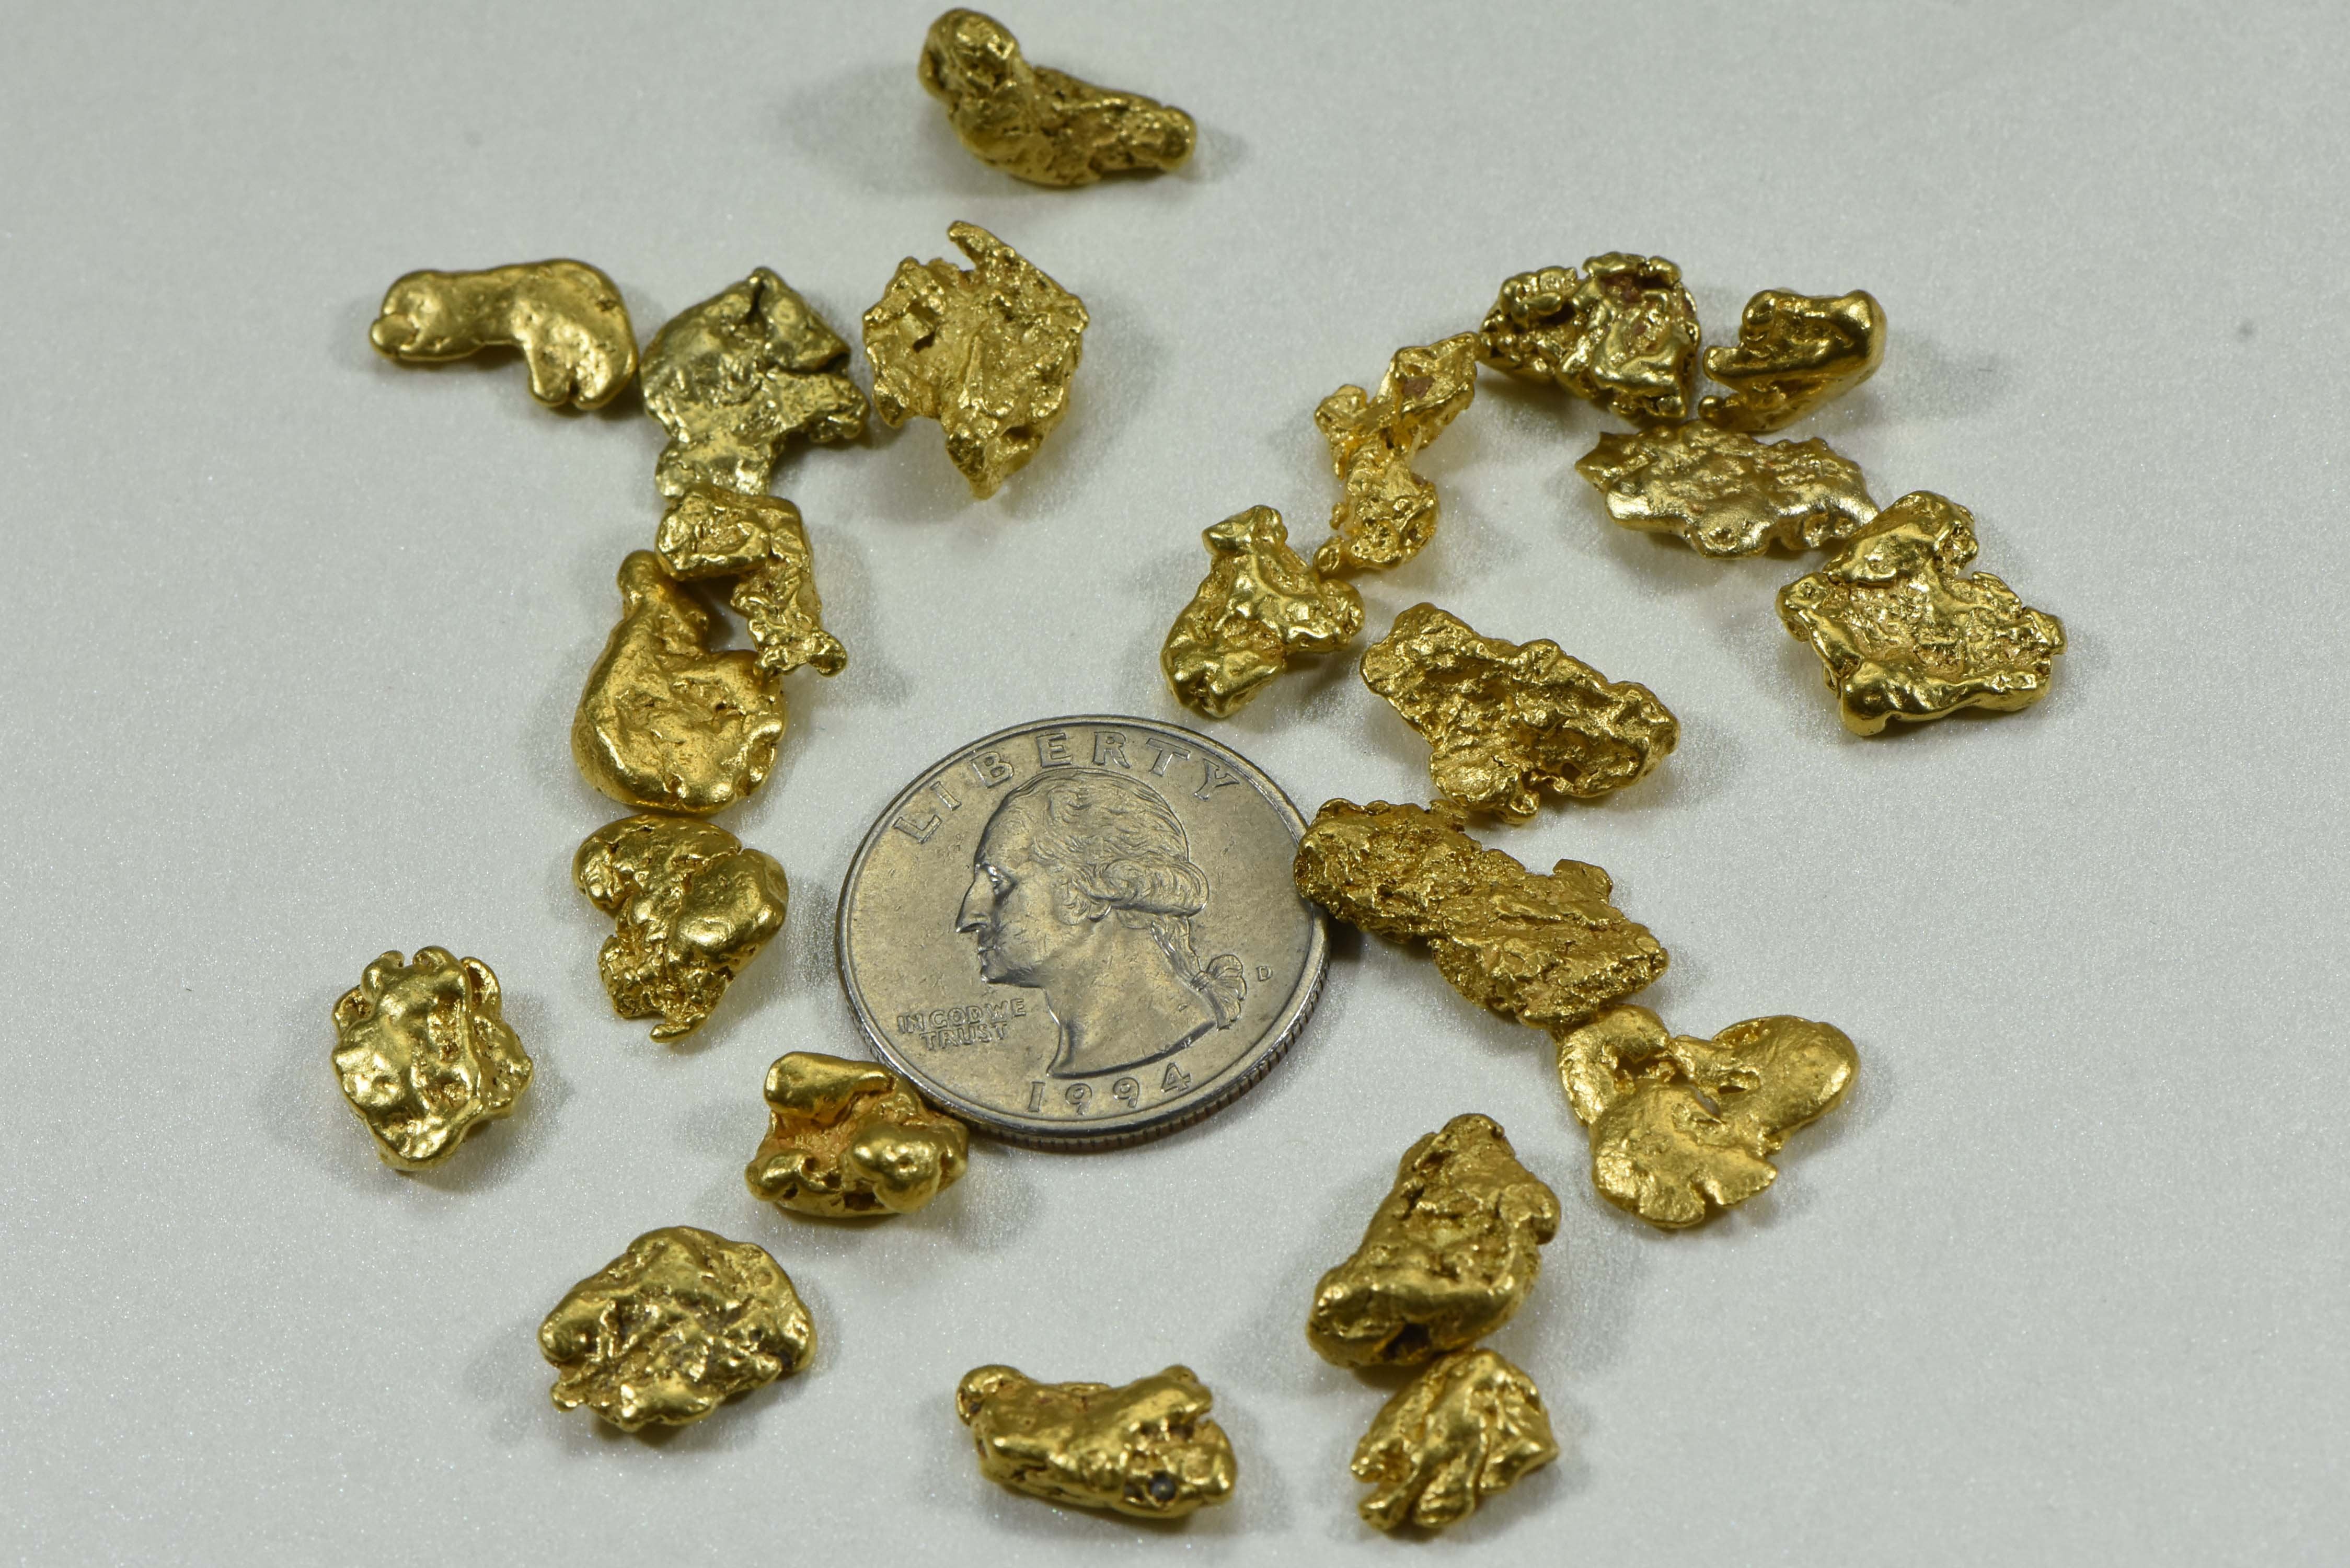 Alaskan Bc Natural Gold Nugget 62.20 Gram Lot Of 2 To 5 Gram Nuggets Genuine 2-Troy Oz. Alaska